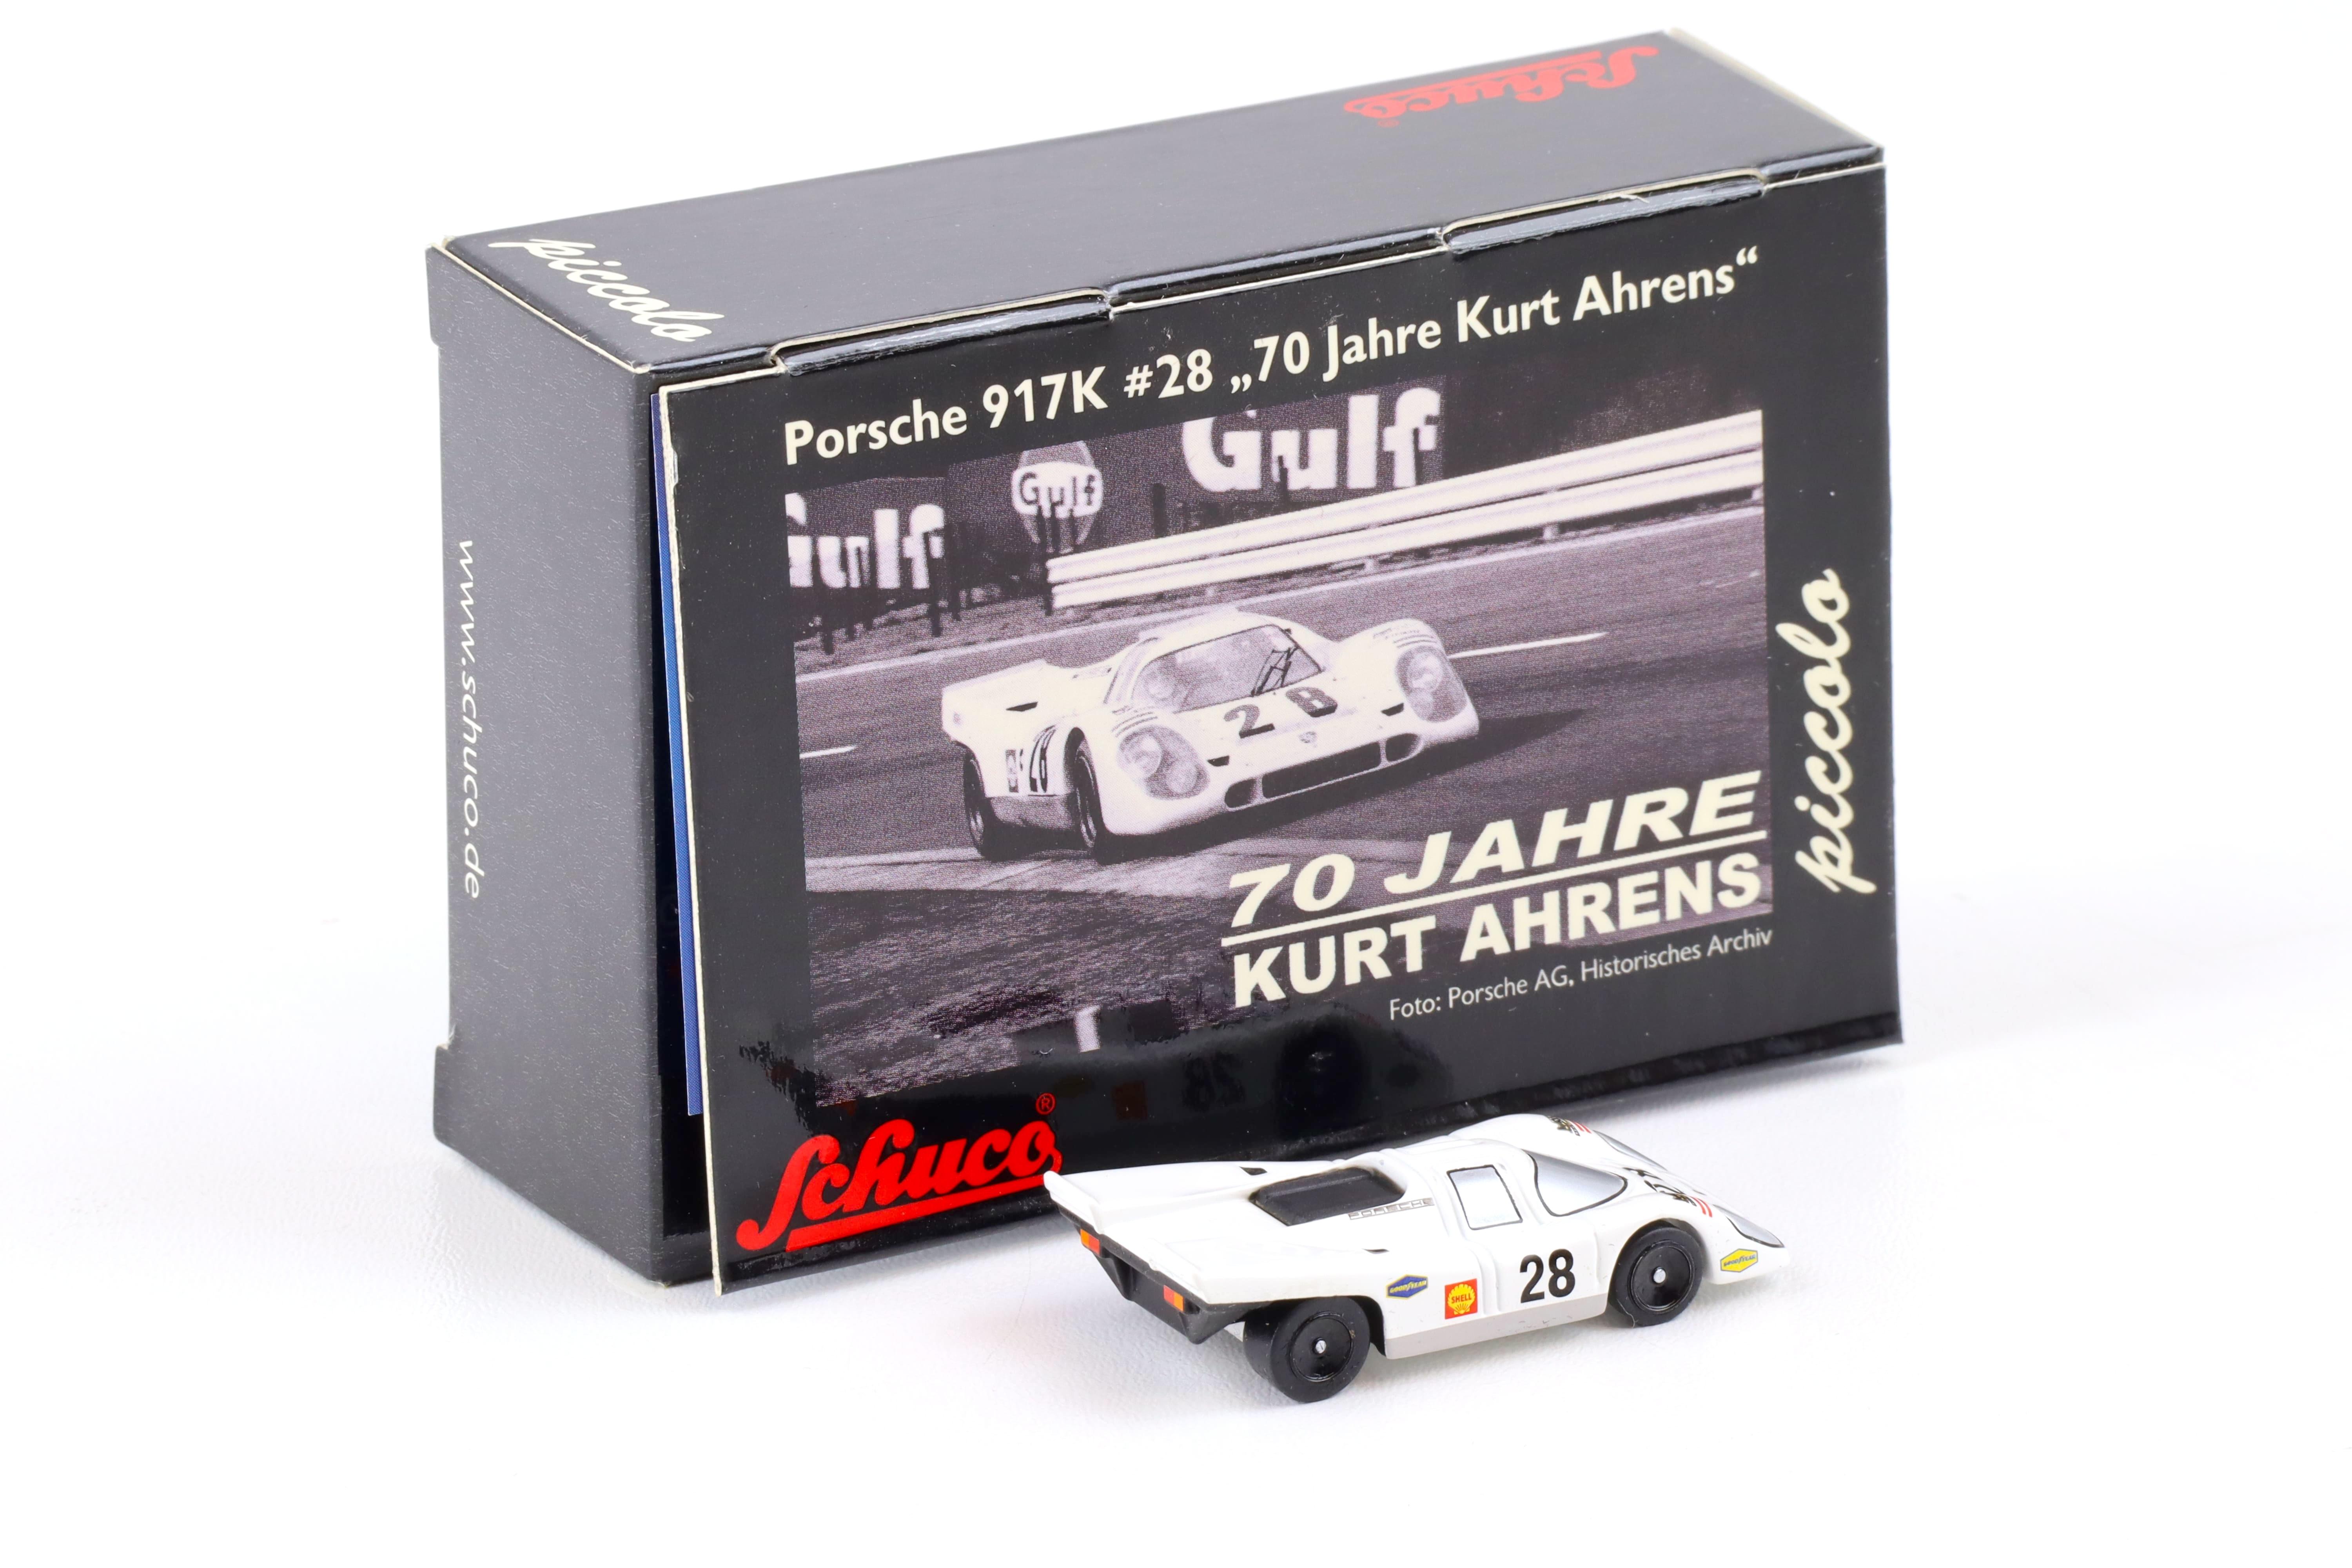 Schuco Piccolo Porsche 917K #28 white 70 Jahre Kurt Ahrens